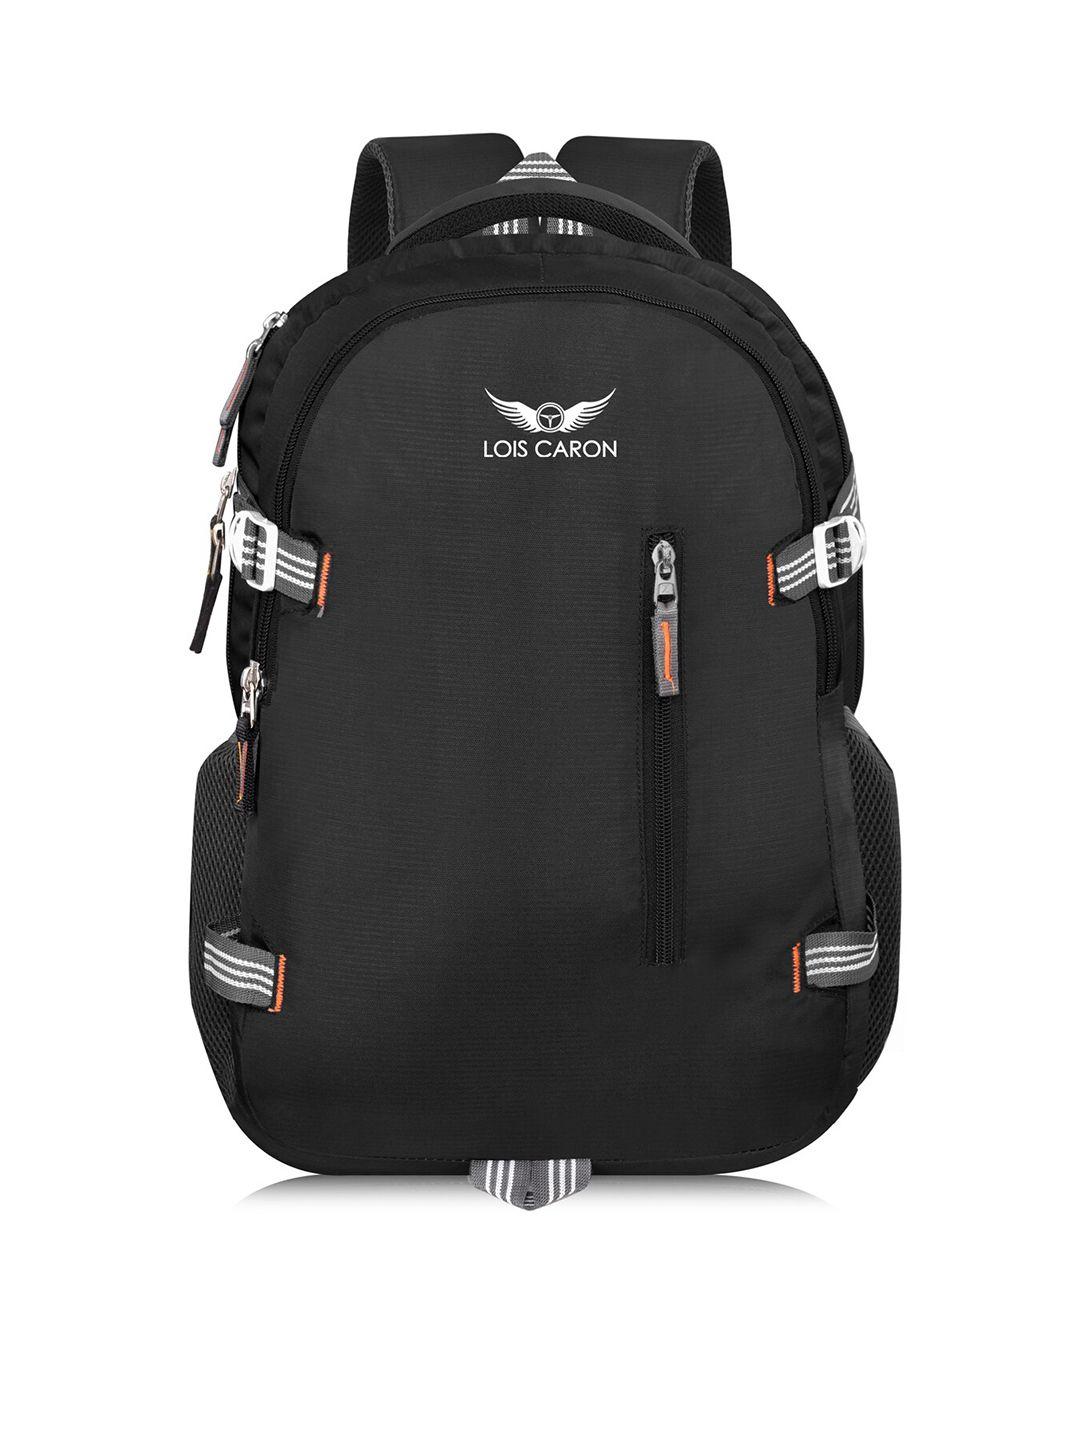 lois caron unisex black solid backpack